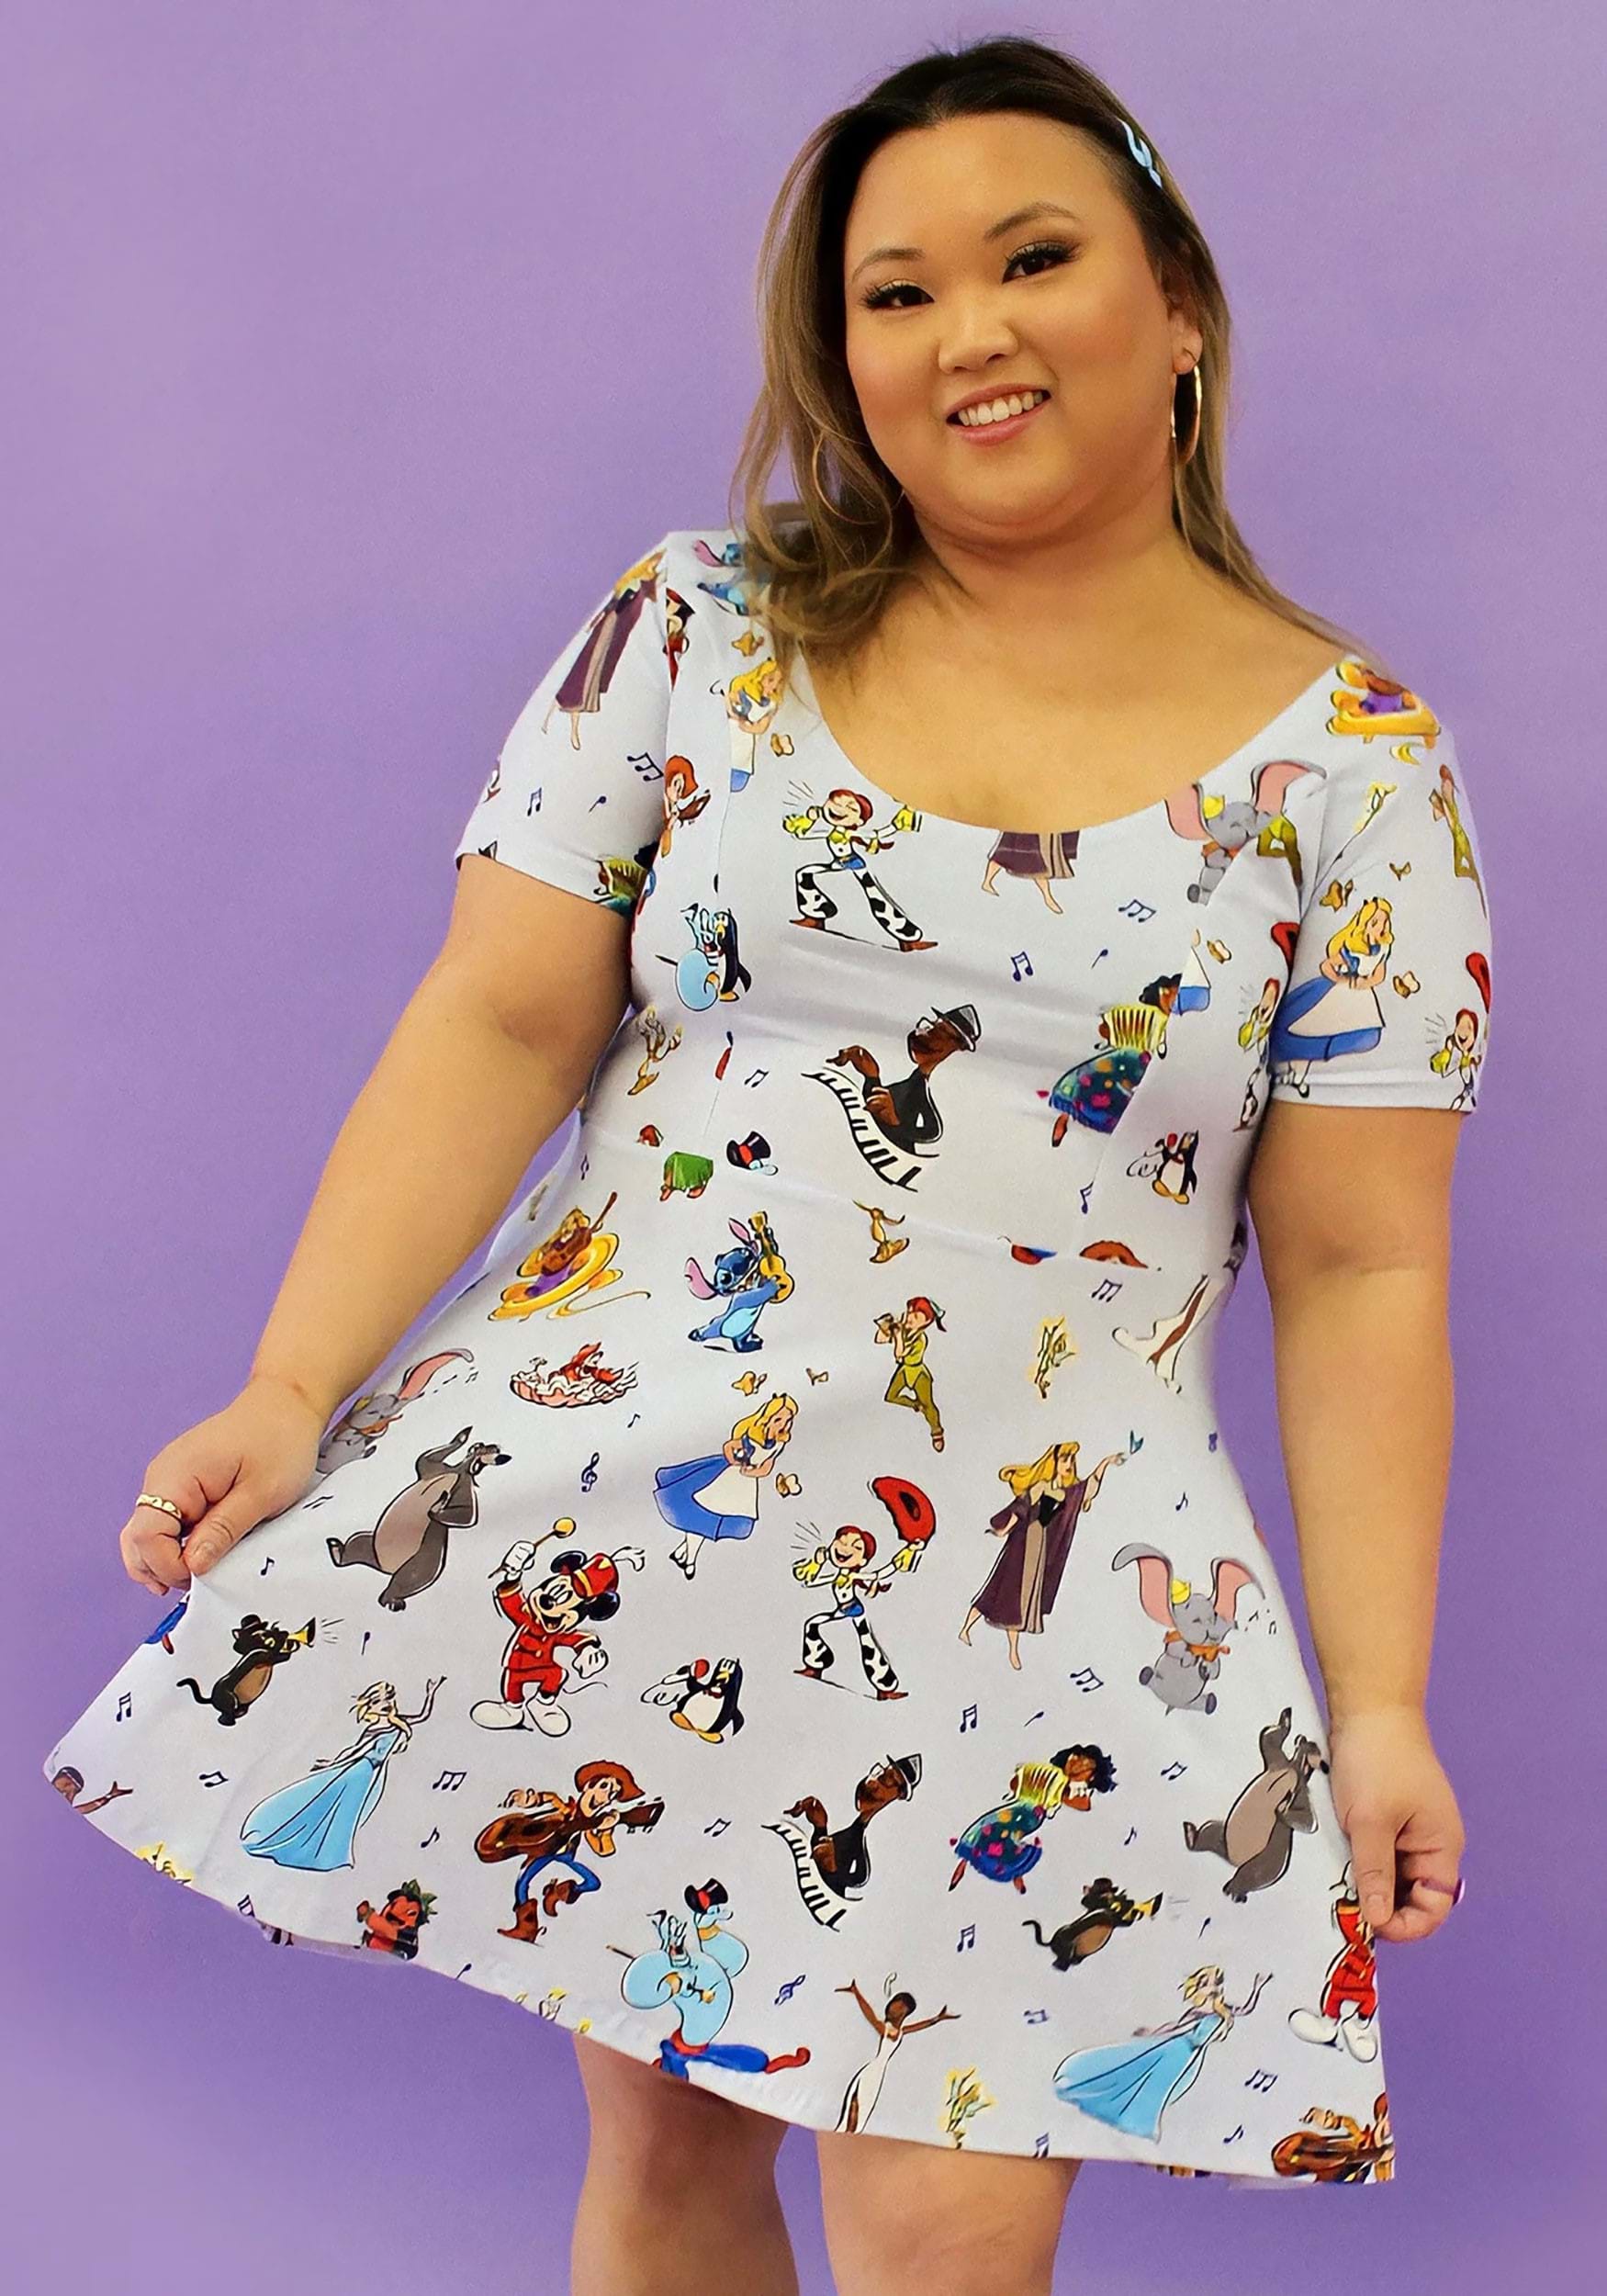 Disney Dress Purple Floral Mickey Mouse Print Dress. Disney Dress for Women  Regular and Plus Size 